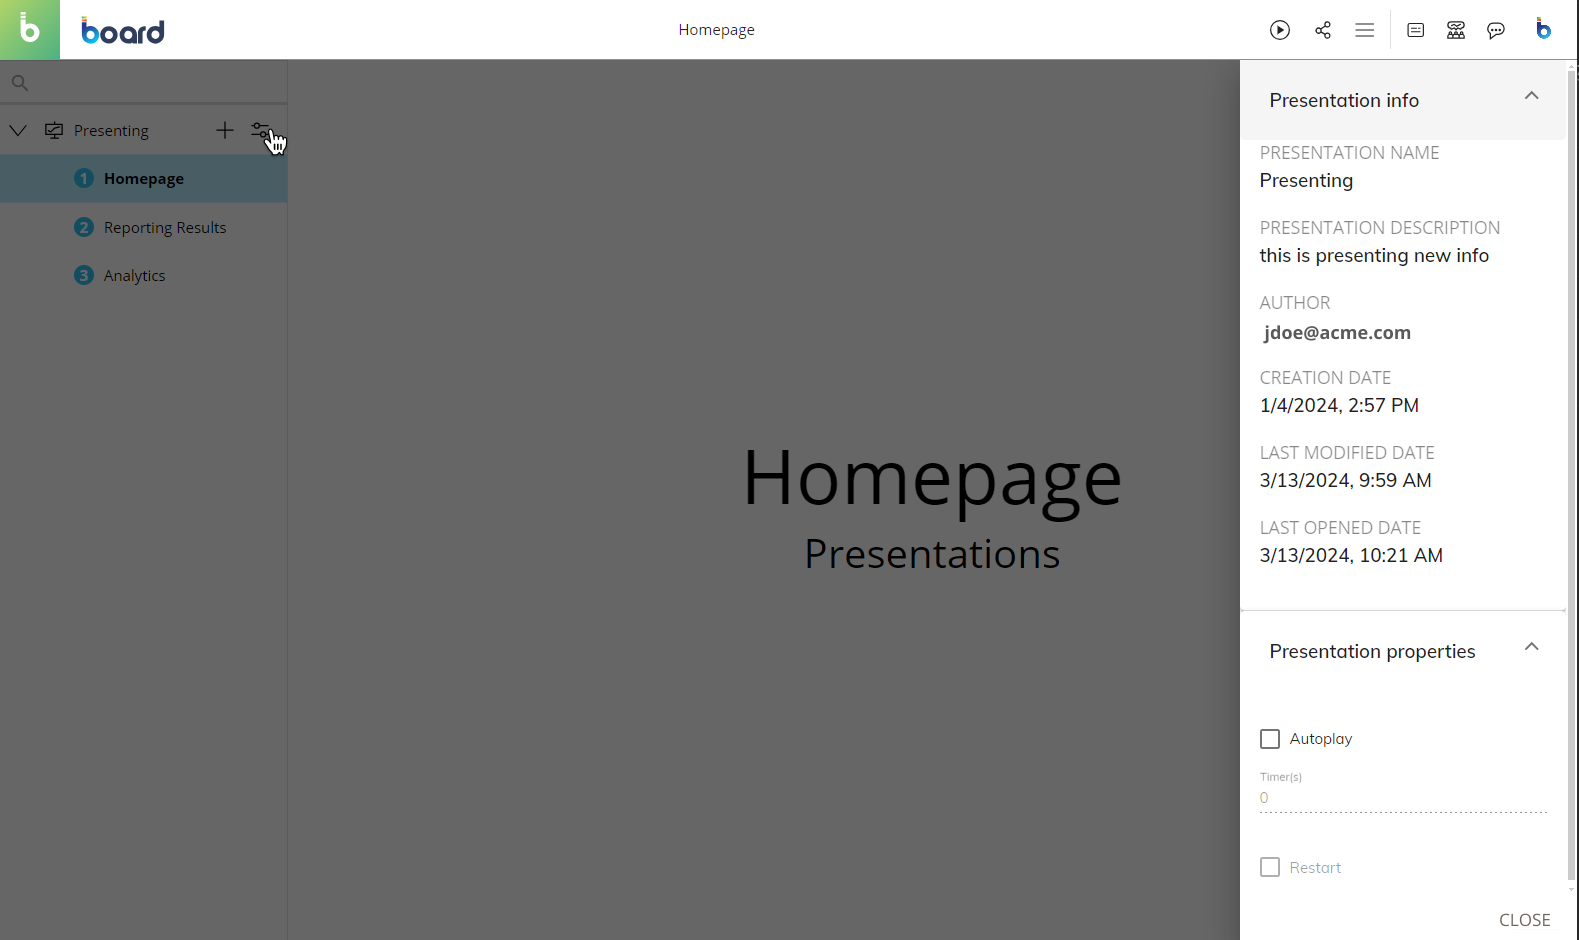 contents/assets/images/presentation.info1.png